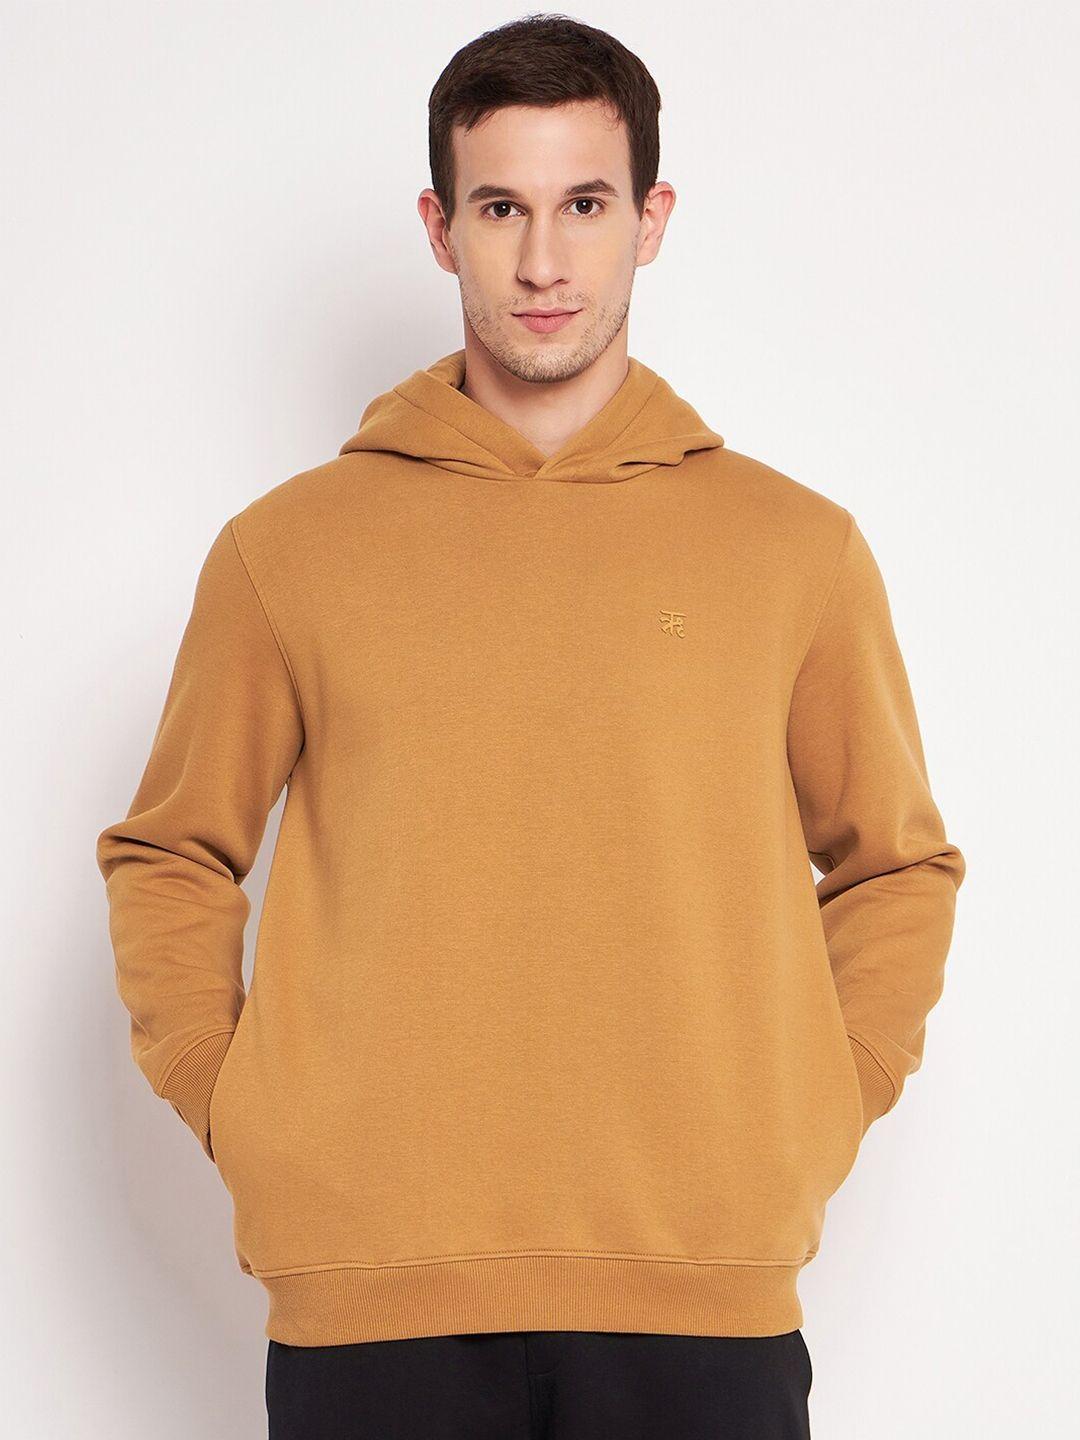 edrio hooded fleece pullover sweatshirt